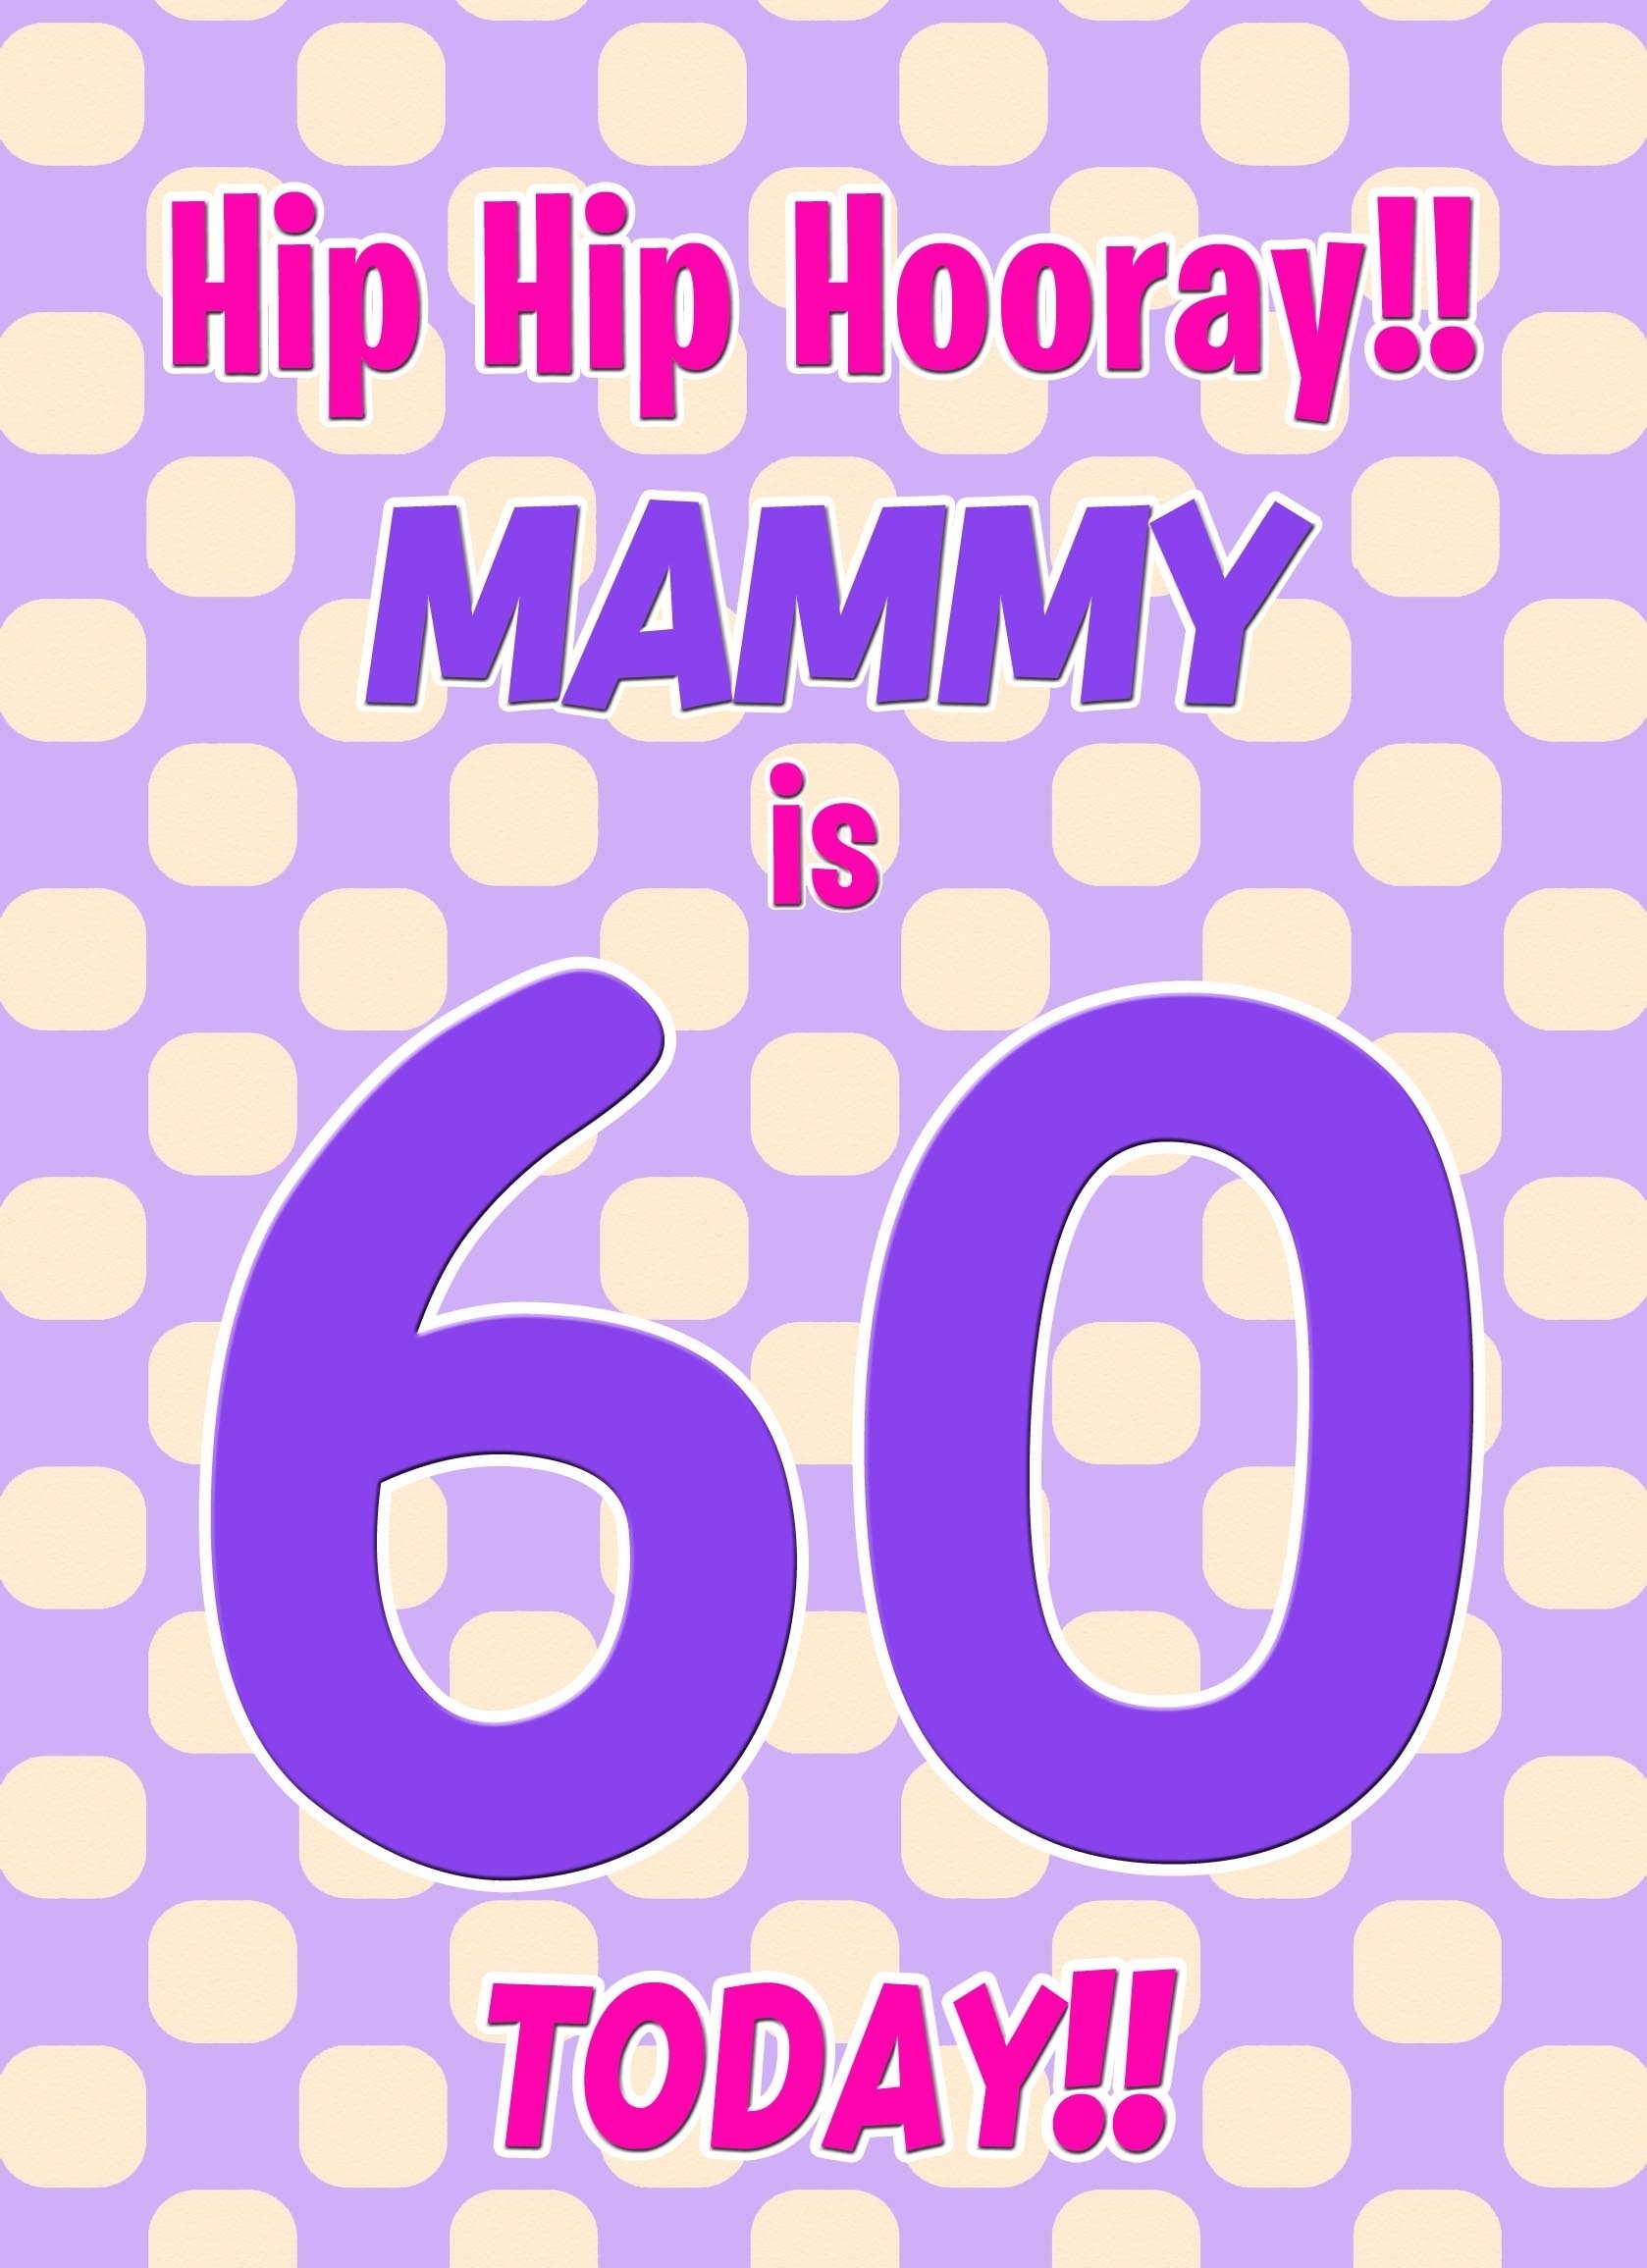 Mammy 60th Birthday Card (Purple Spots)